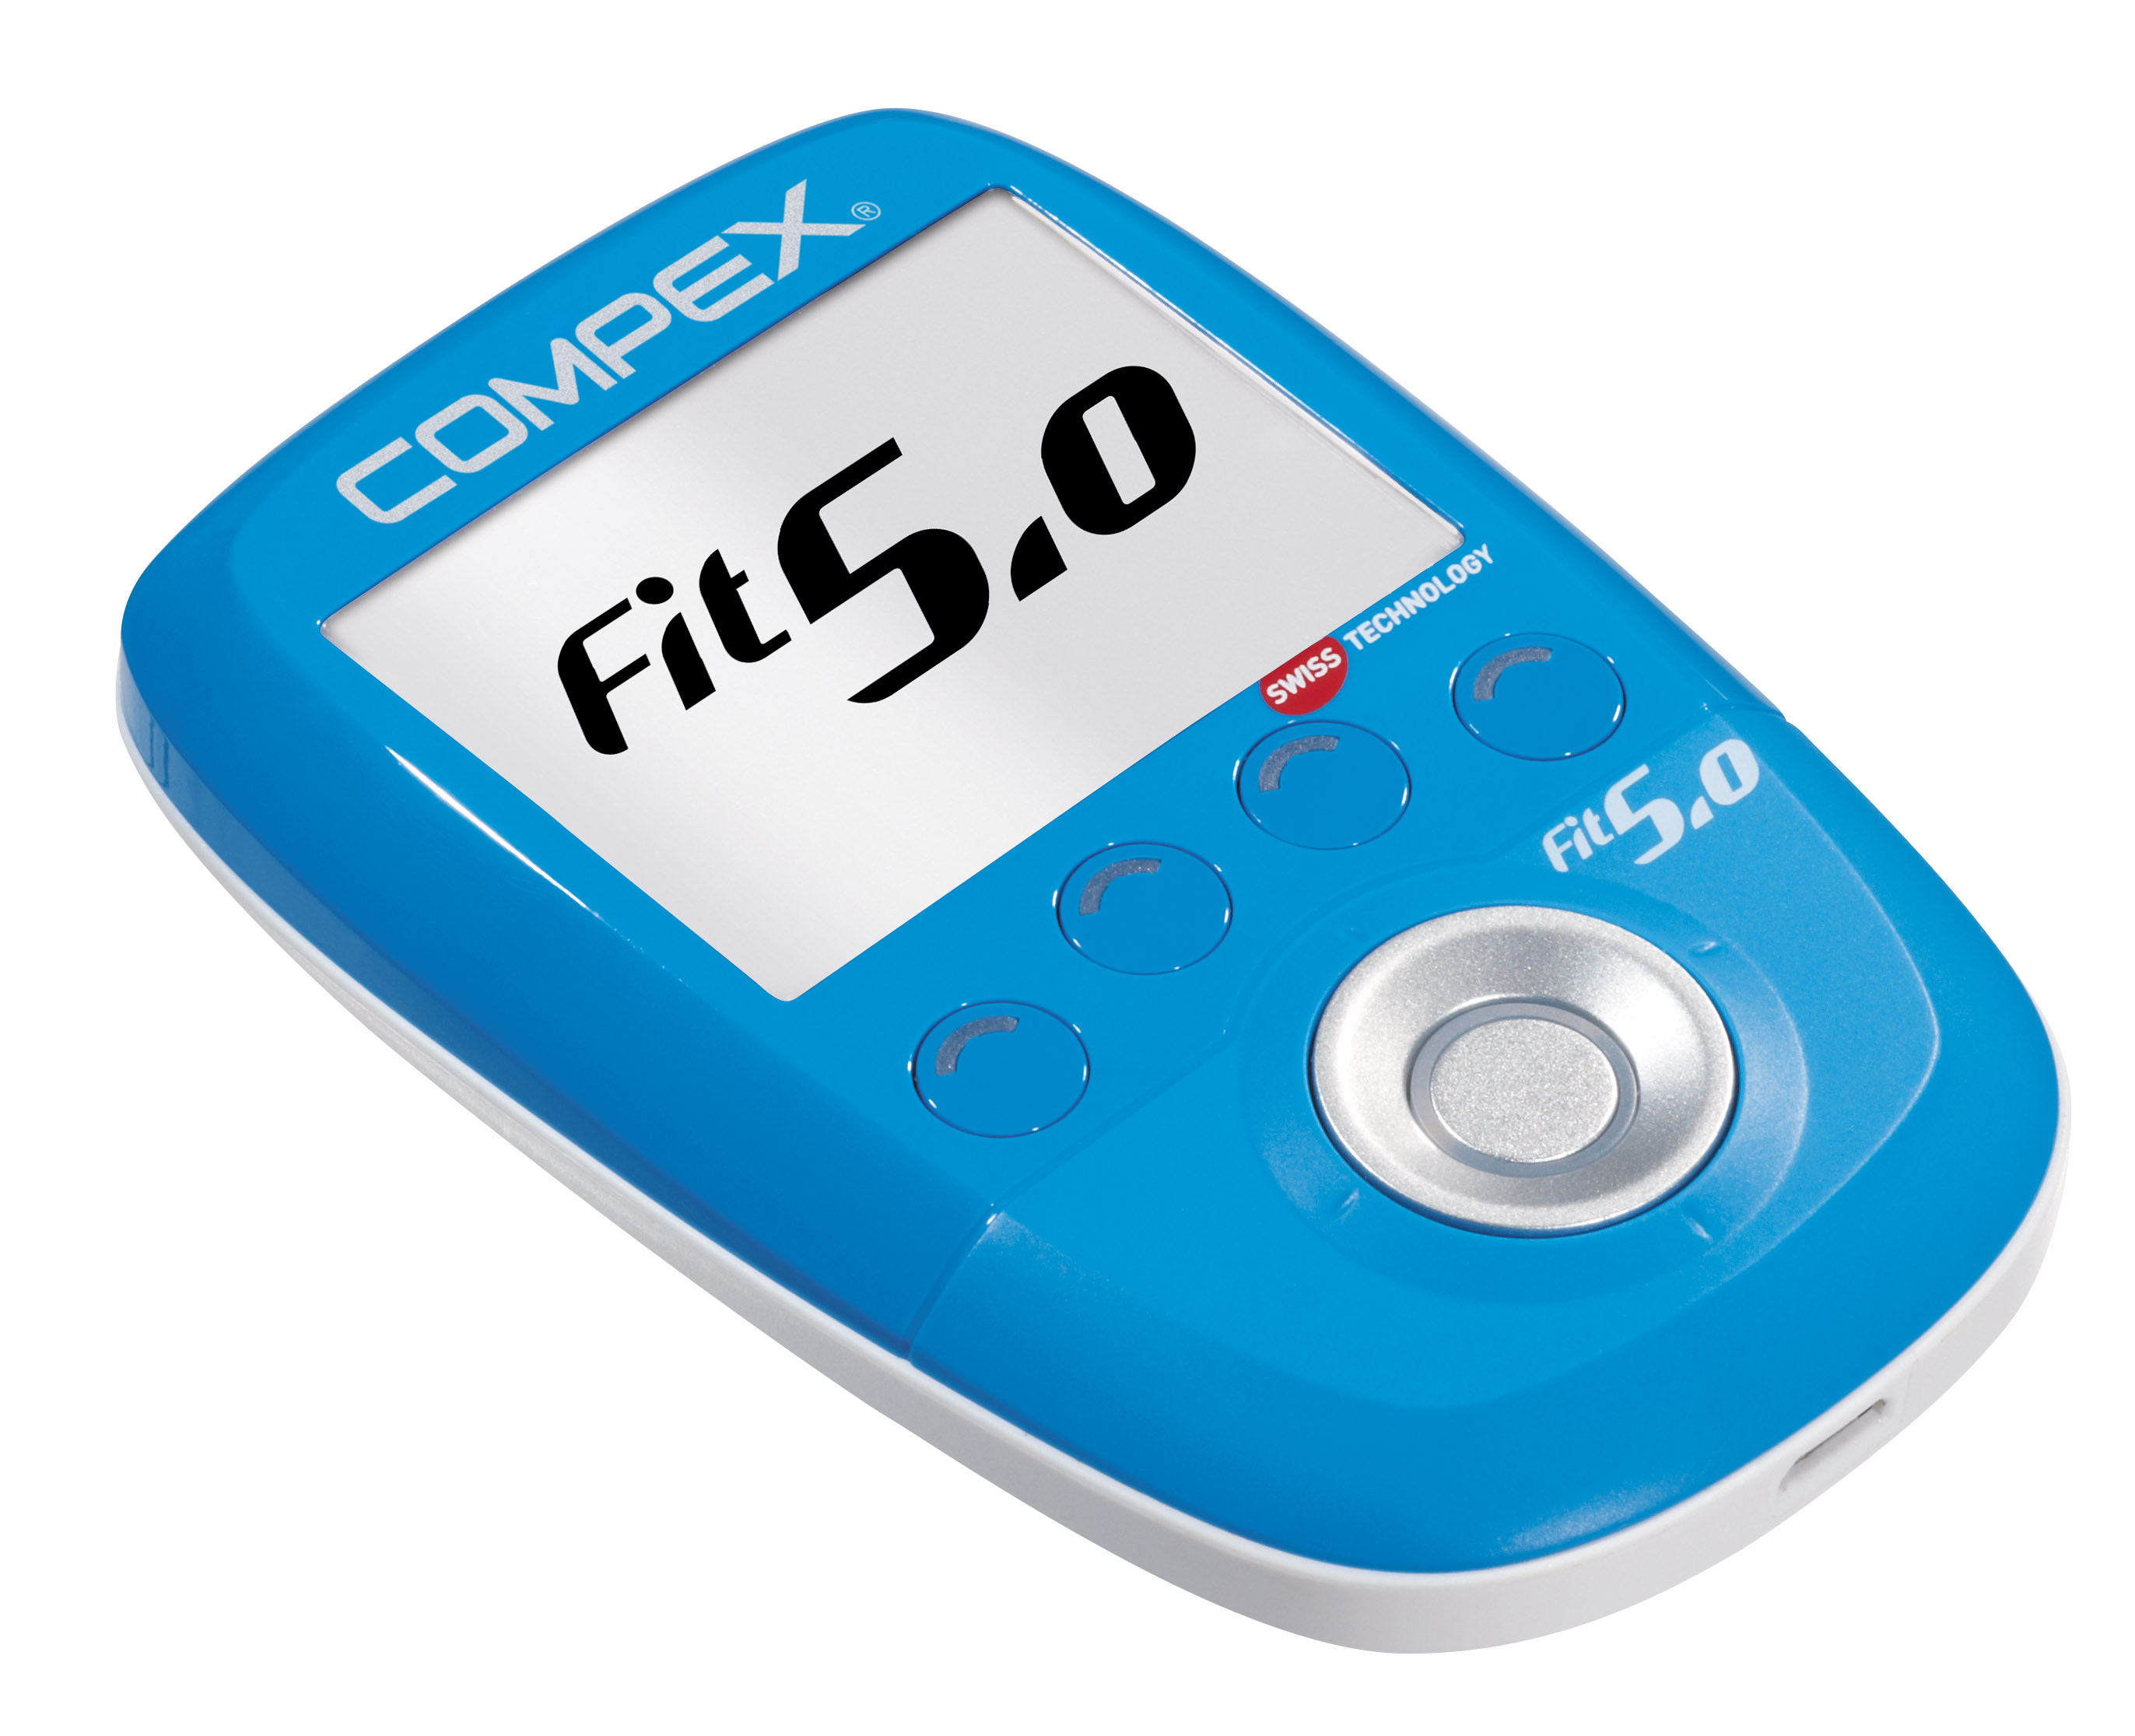 COMPEX Stim Fit Blau 5.0 Muskelstimulationsgerät